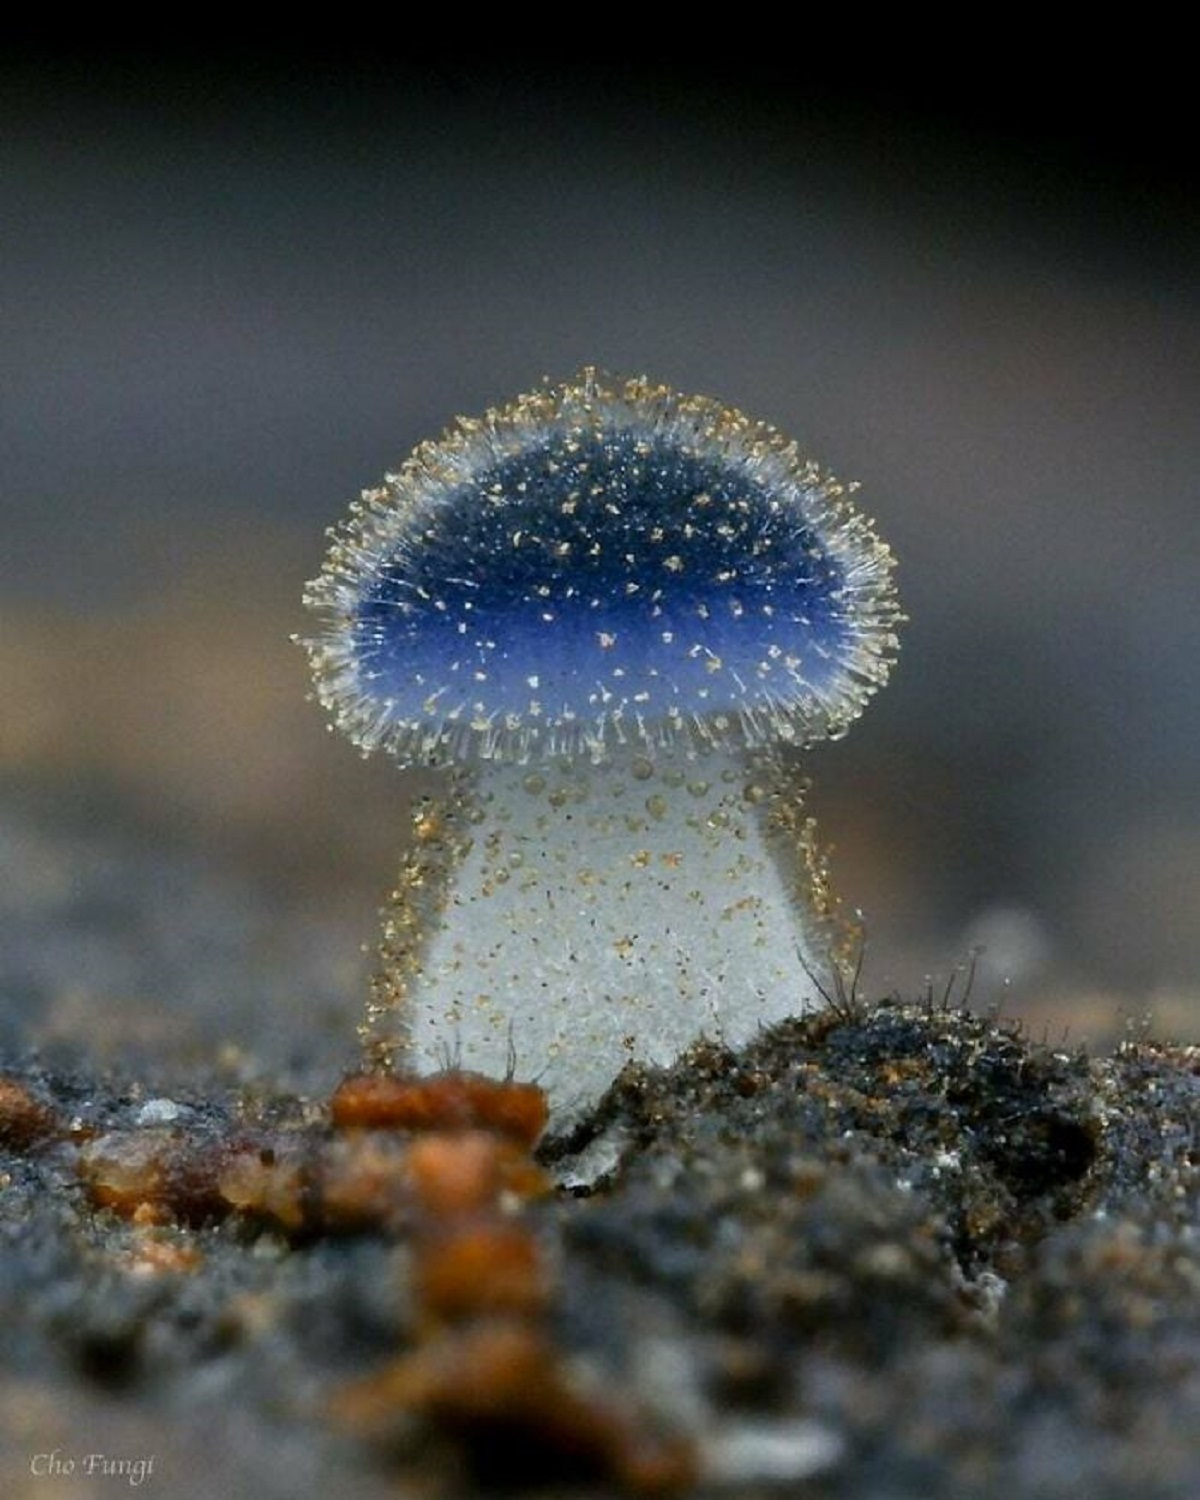 fascinating photos - mycena subcyanocephala - Cho Fungi